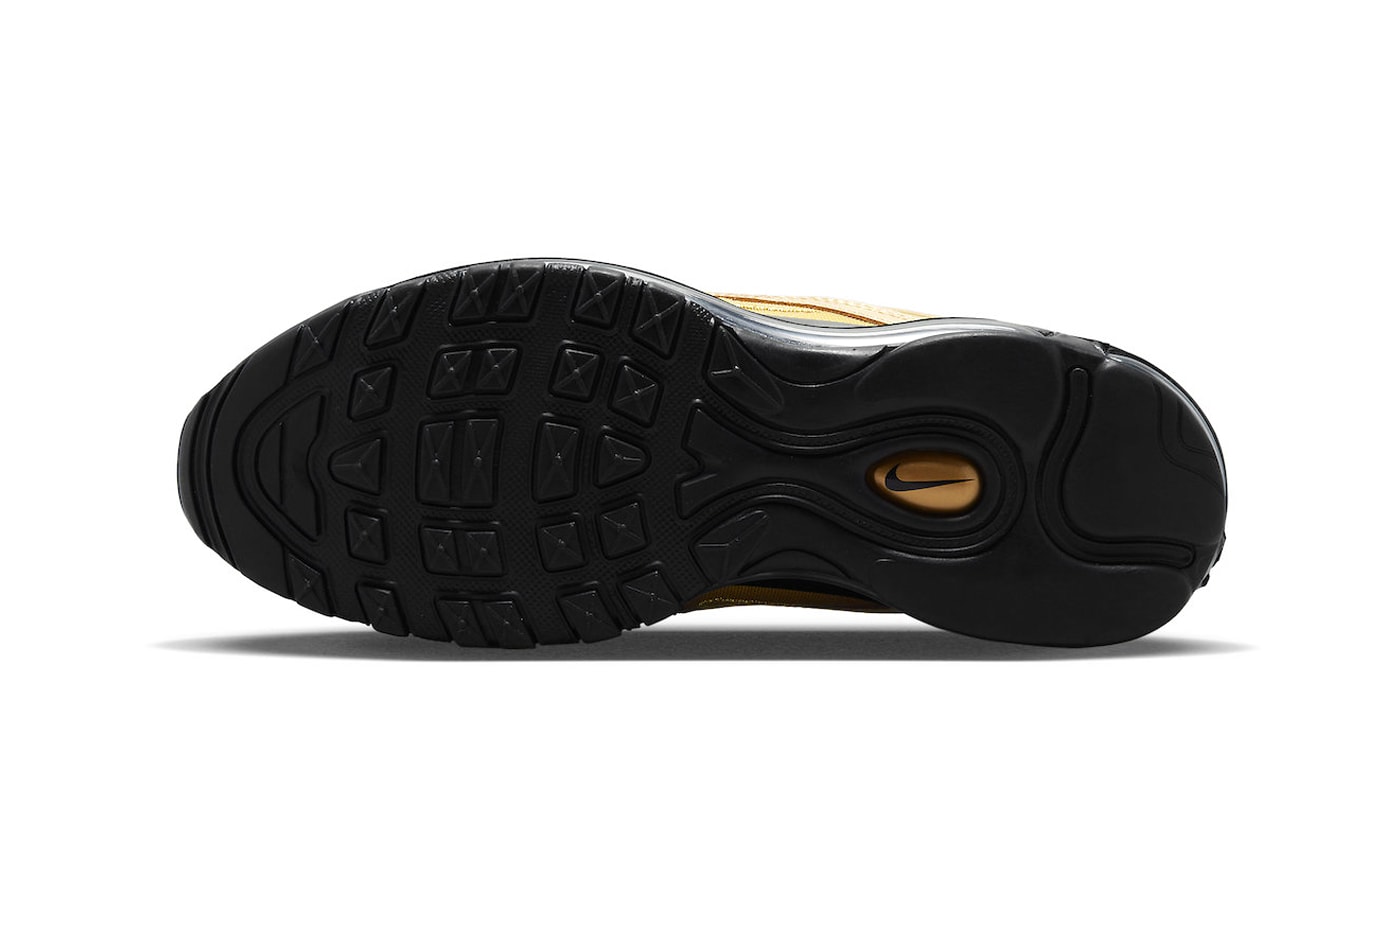 Nike Air Max 97 AM97 Metallic Gold Black 3m dx0137 700 185 usd release date info price